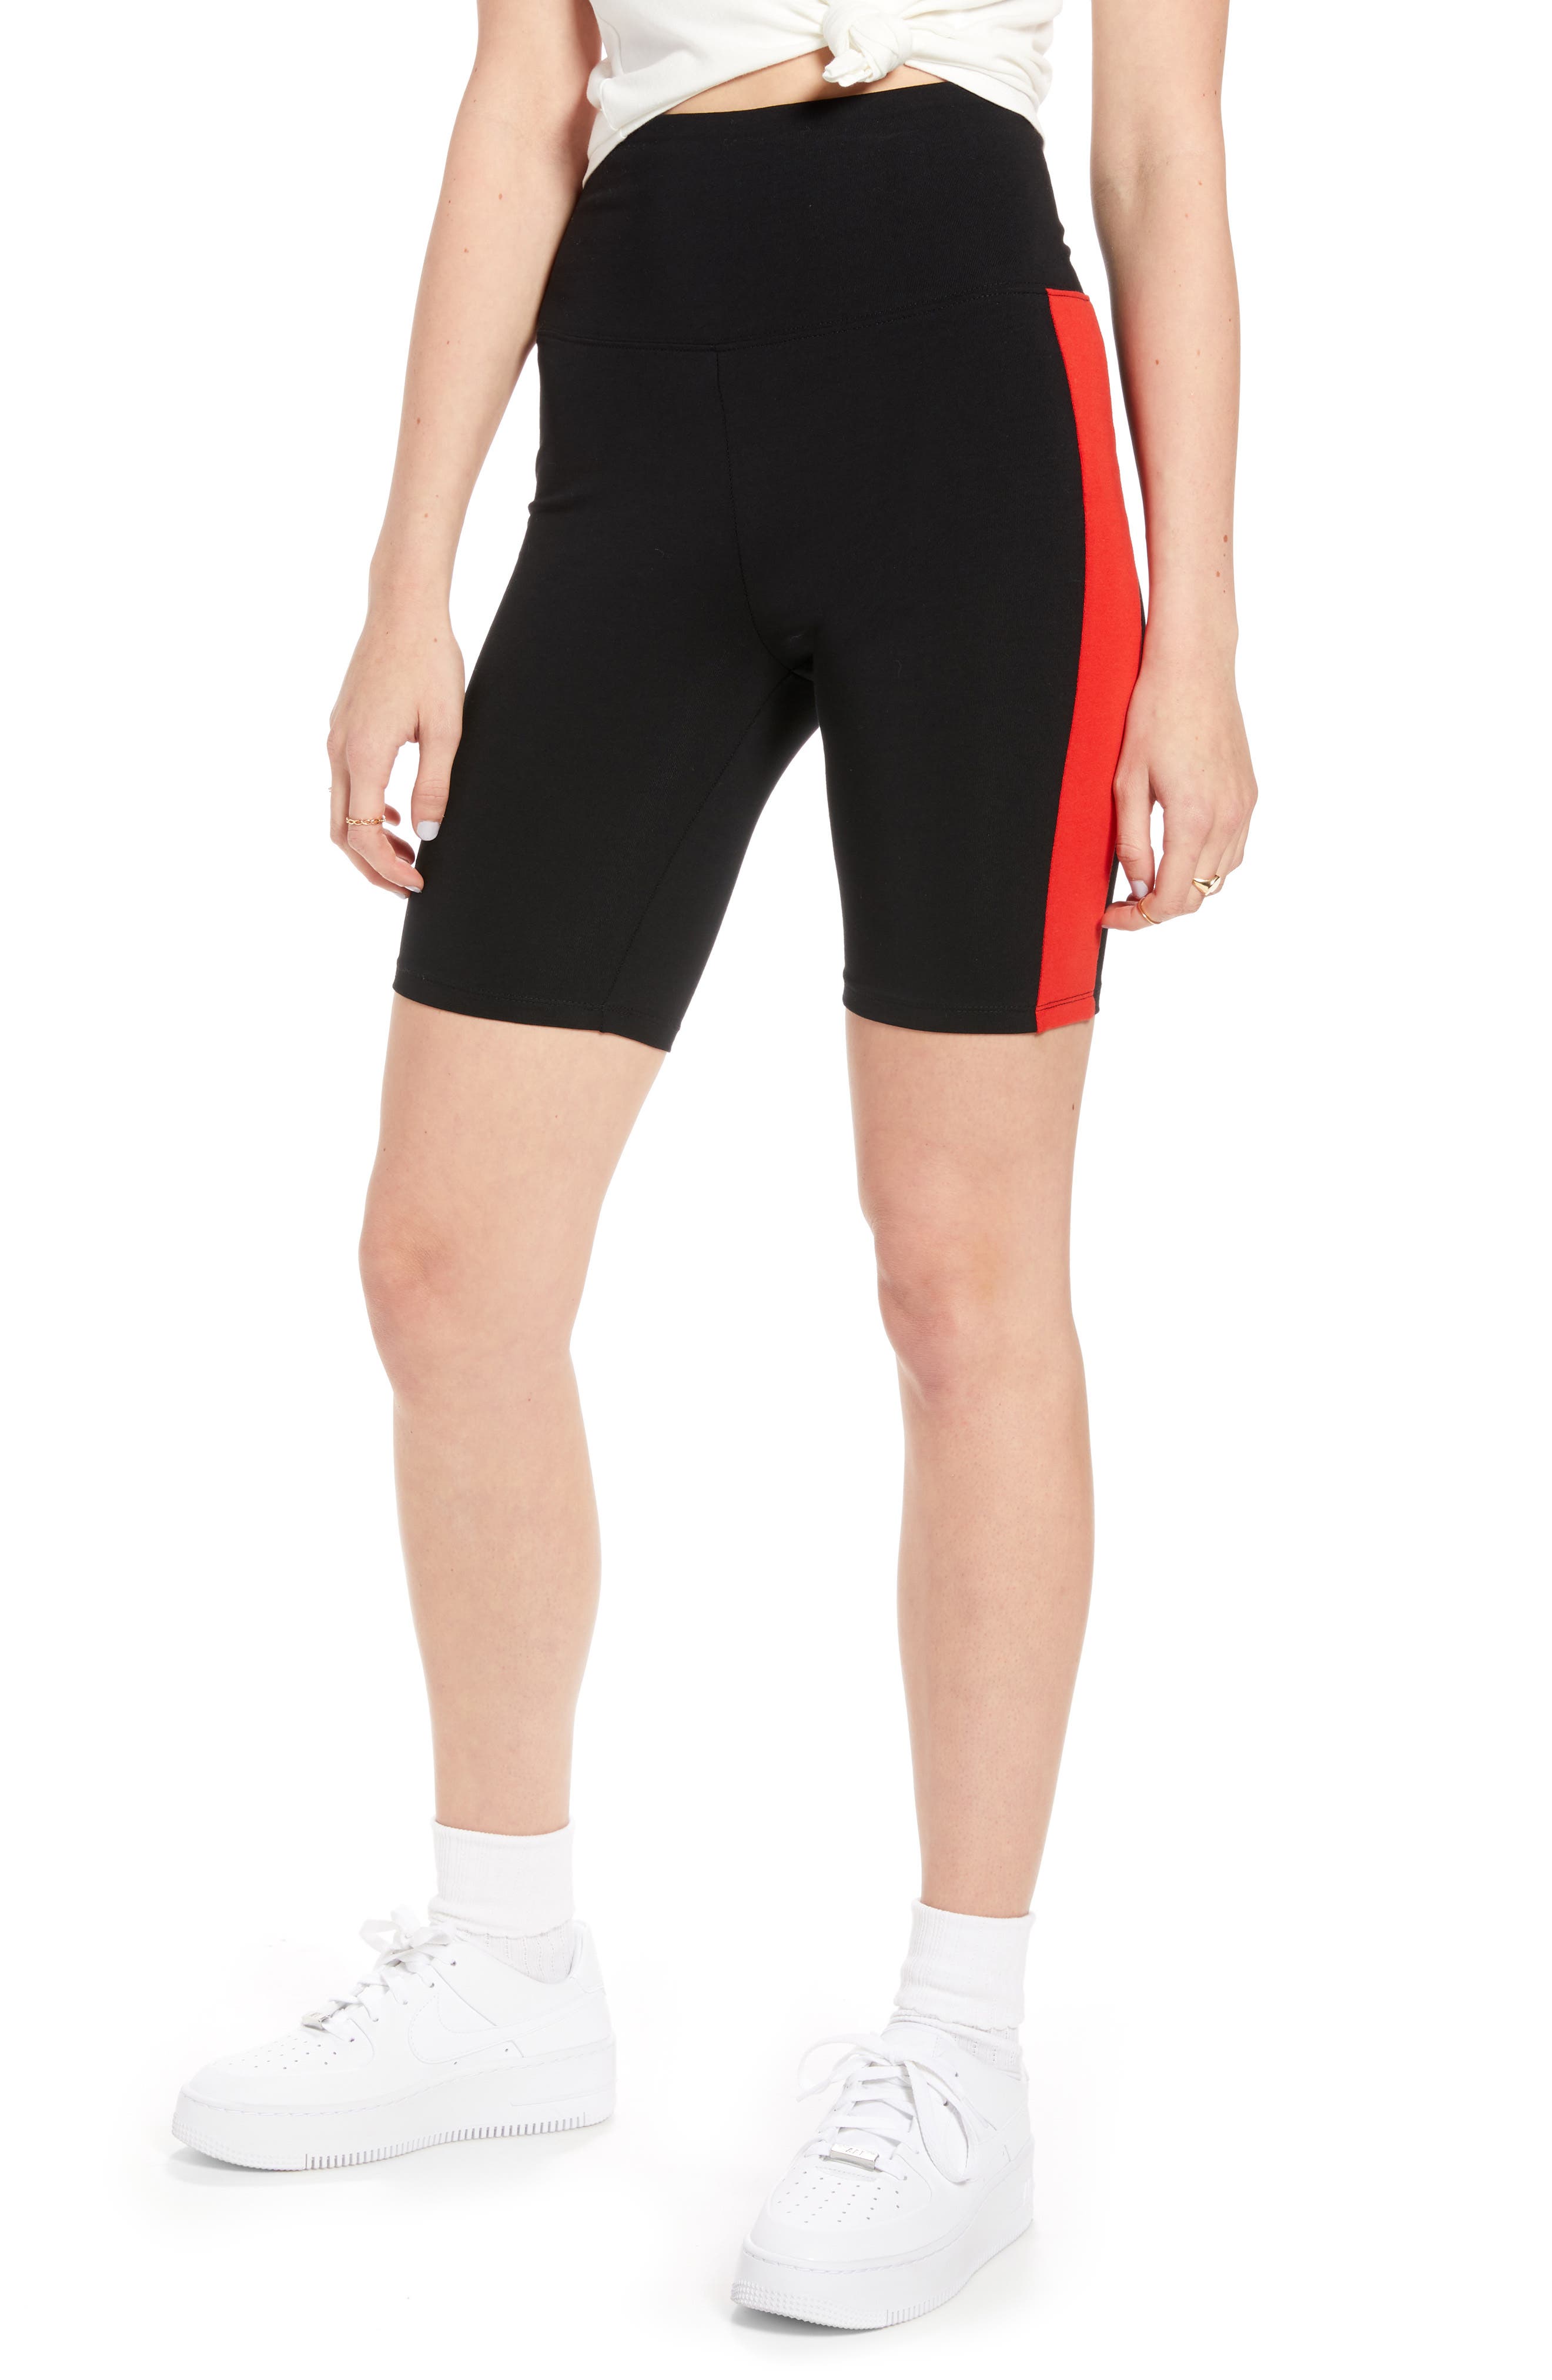 biker shorts with stripe on side